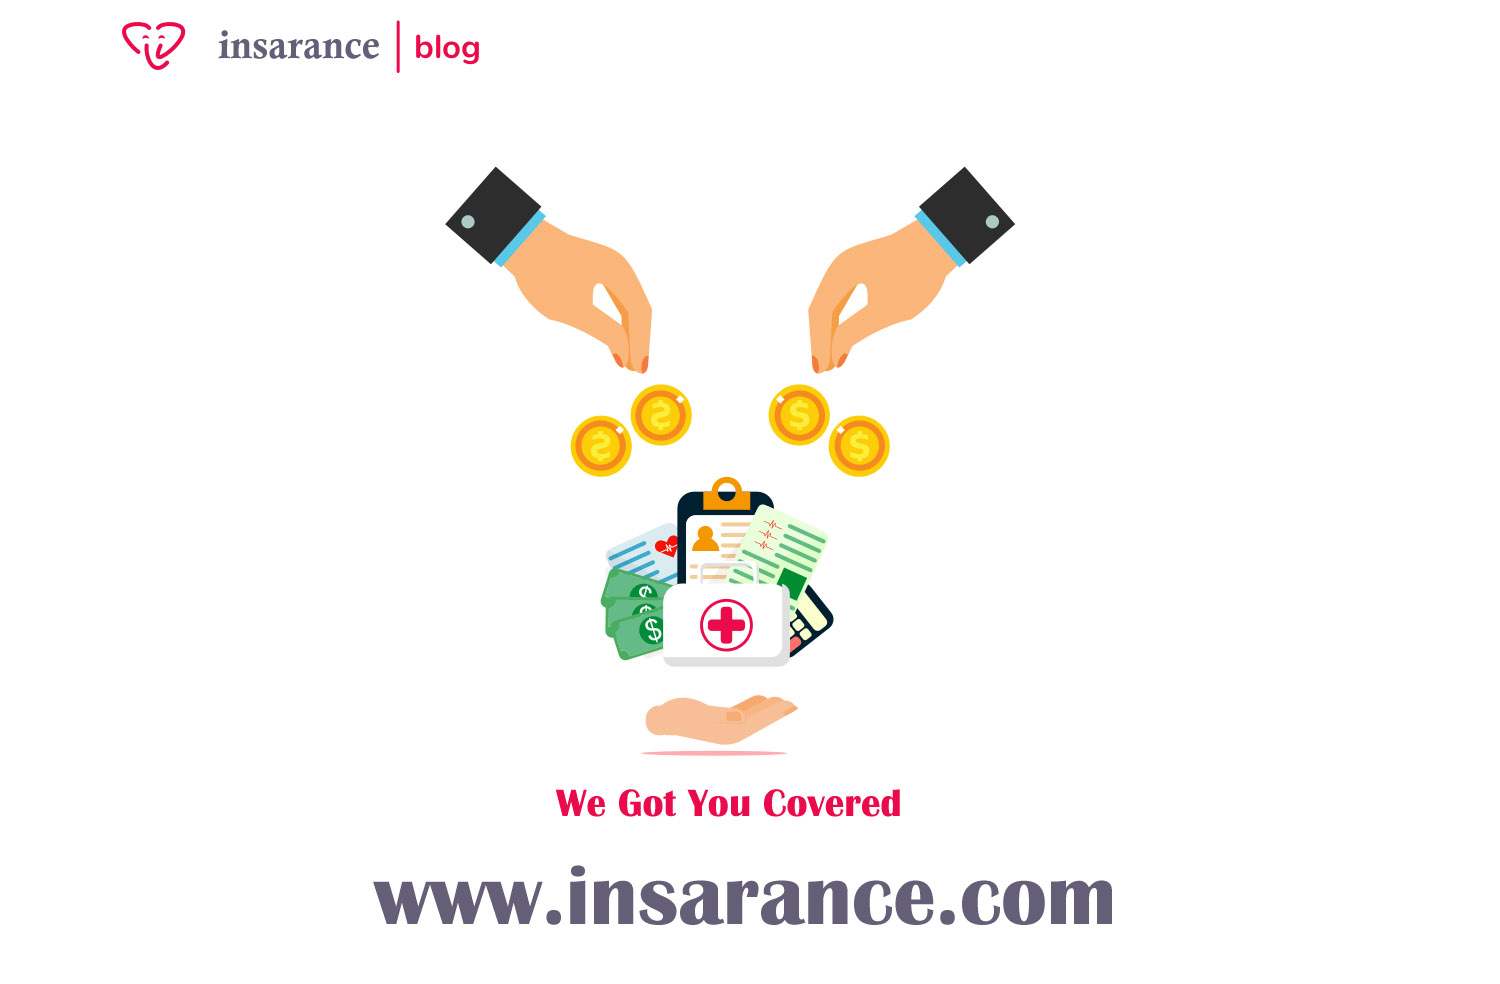 image_insarance_health-insurance.jpg